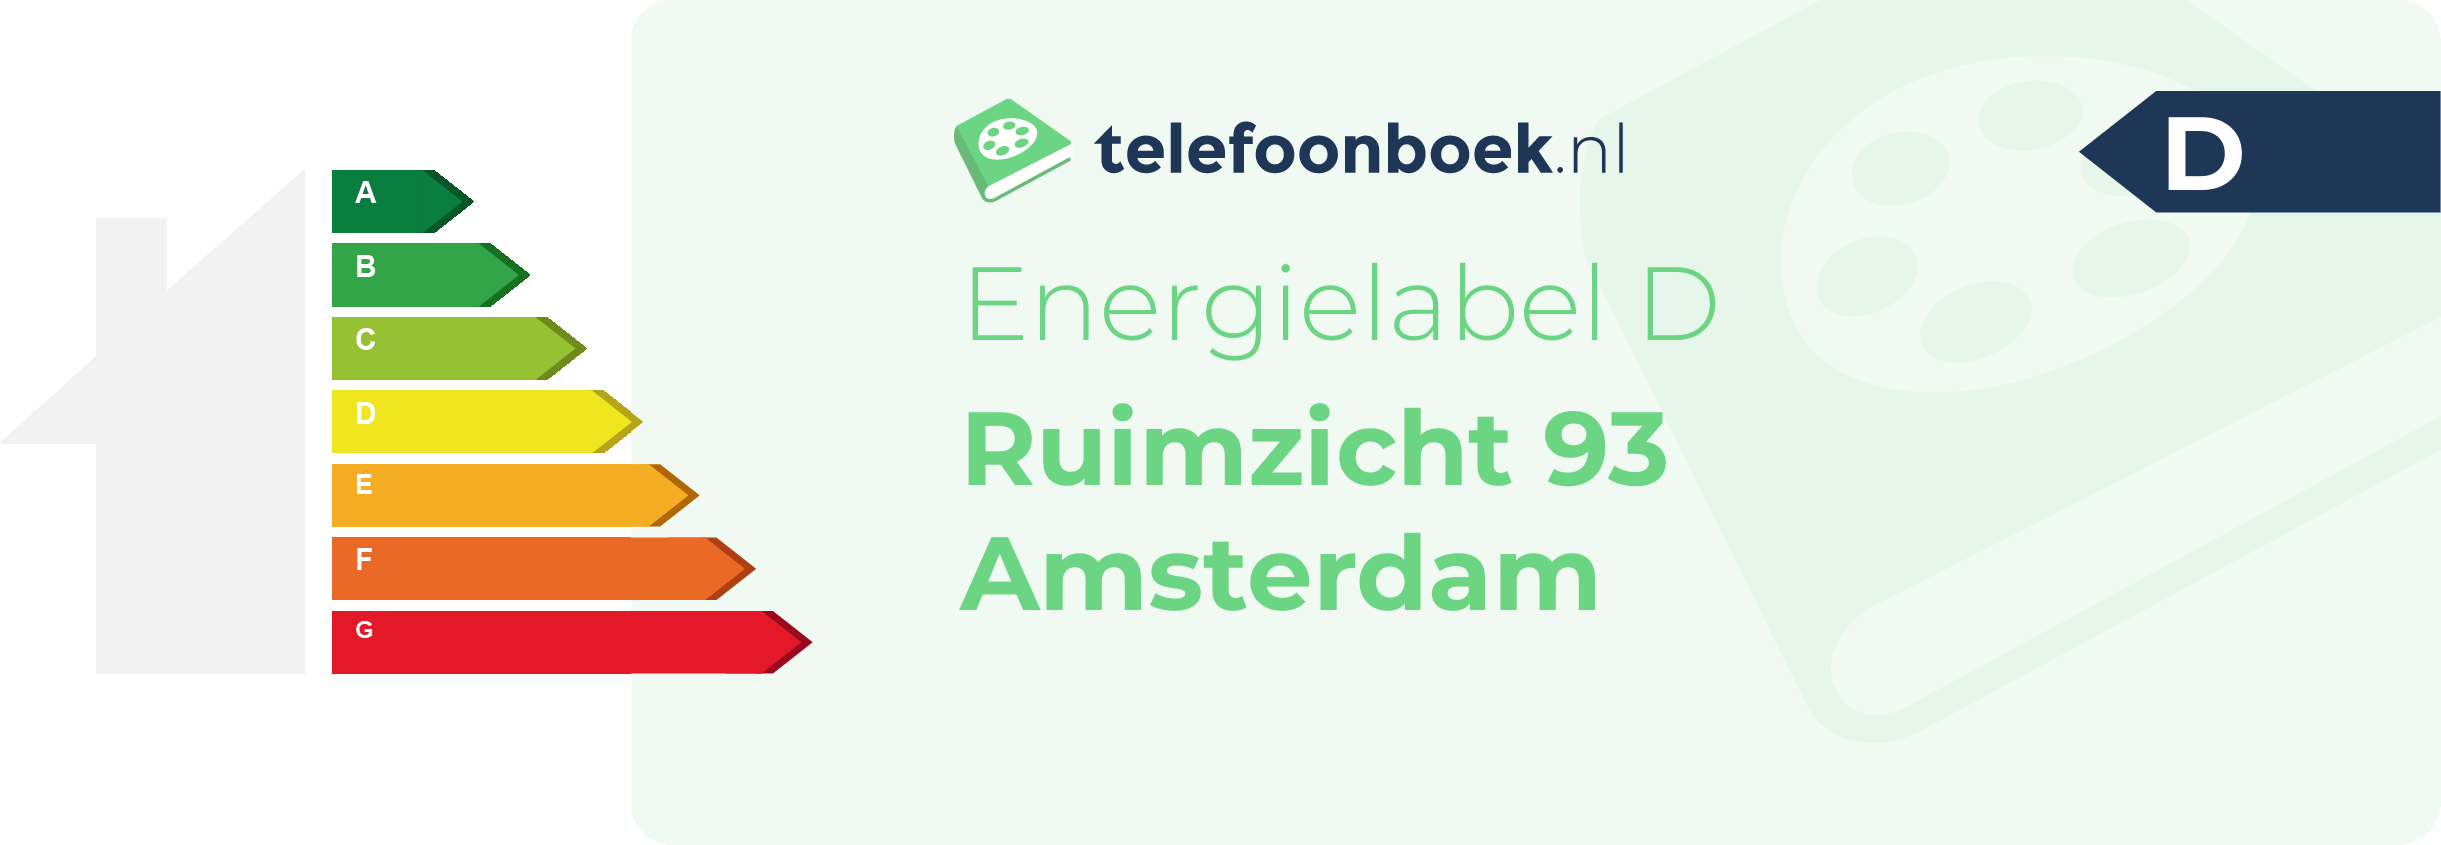 Energielabel Ruimzicht 93 Amsterdam